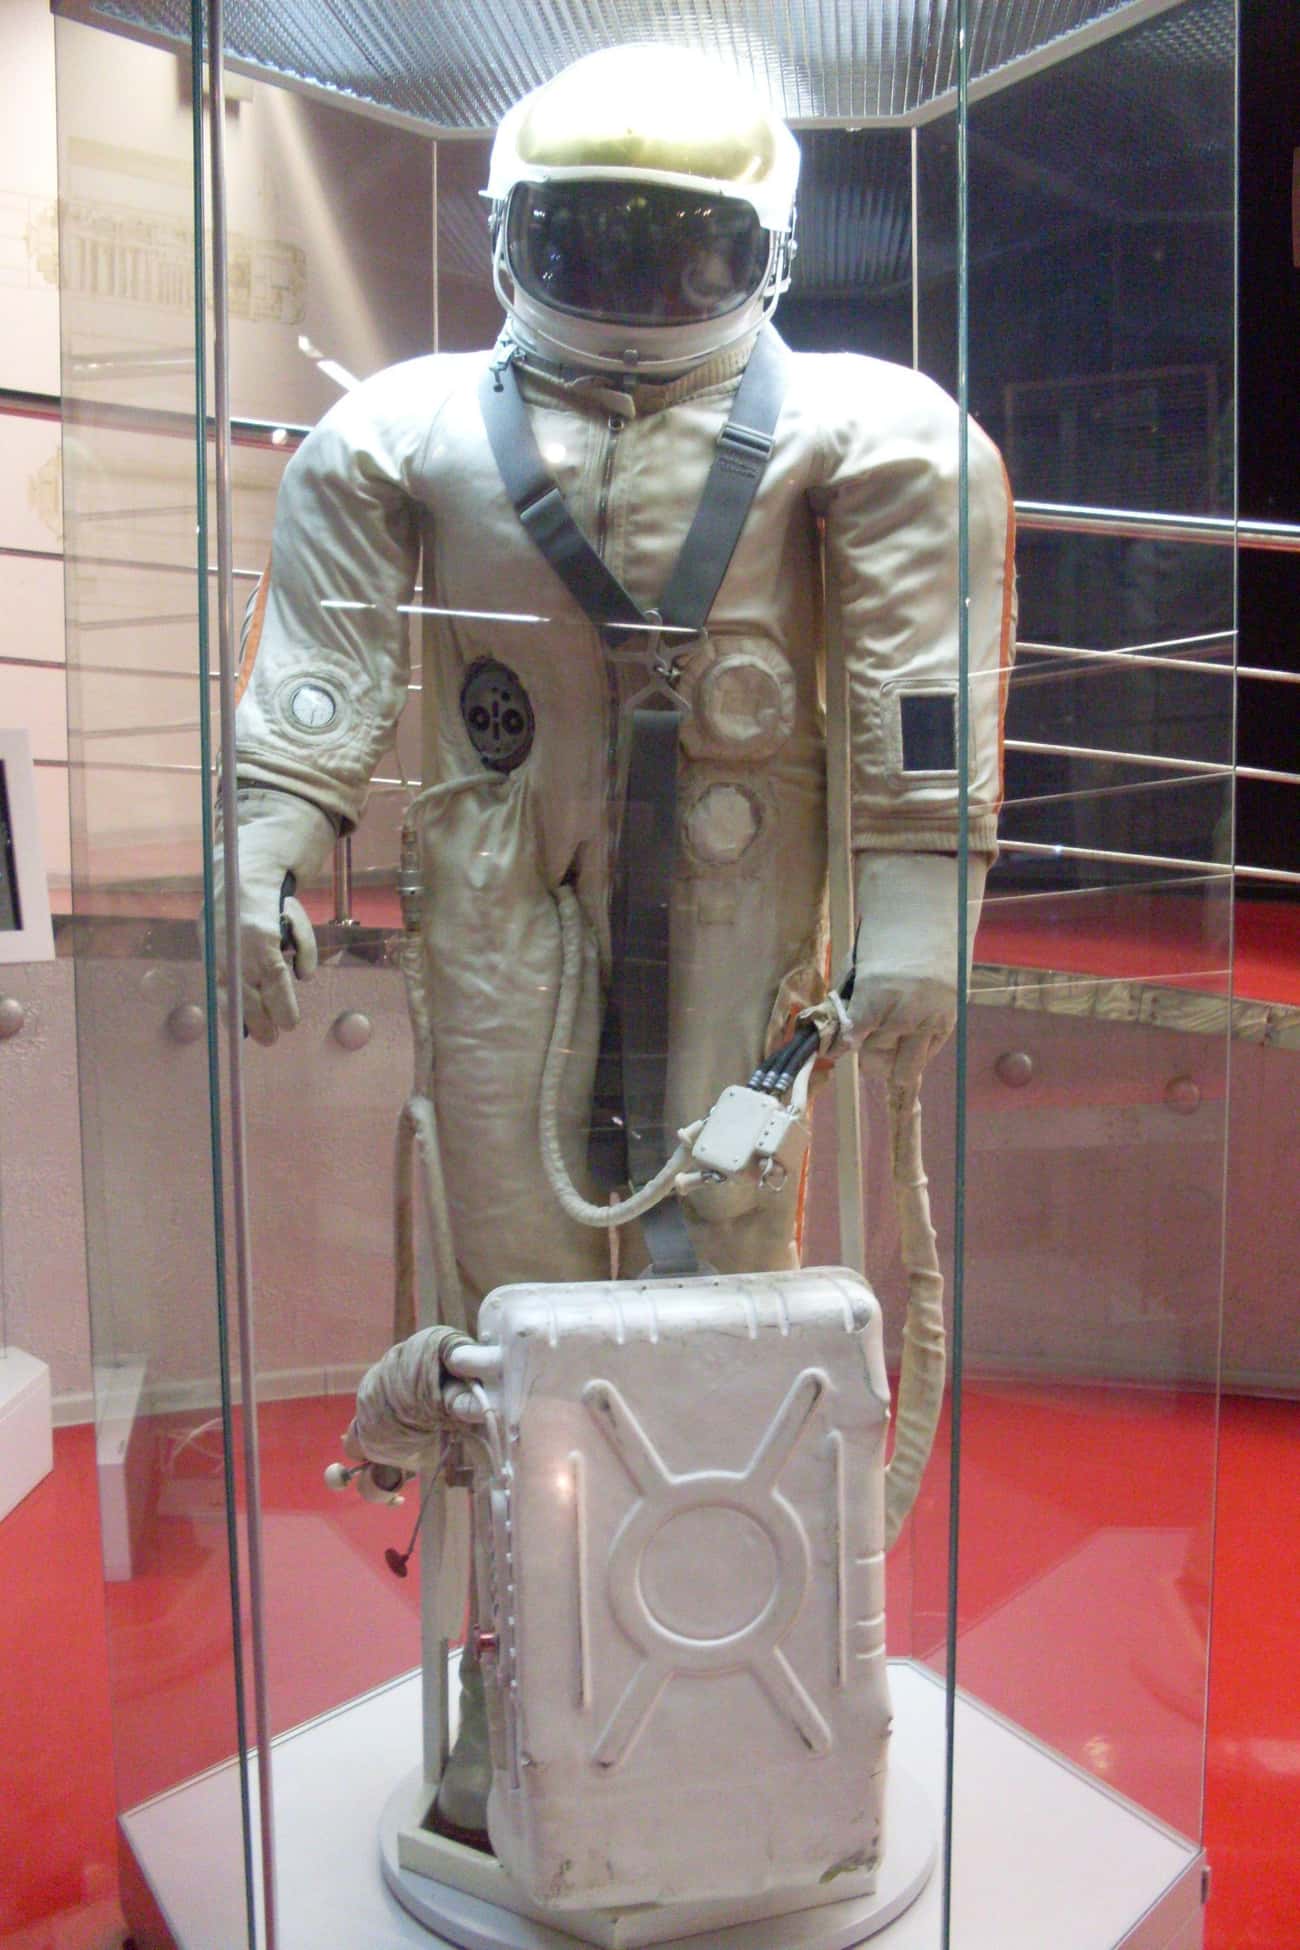 1966-69: Yastreb Space Suit, USSR